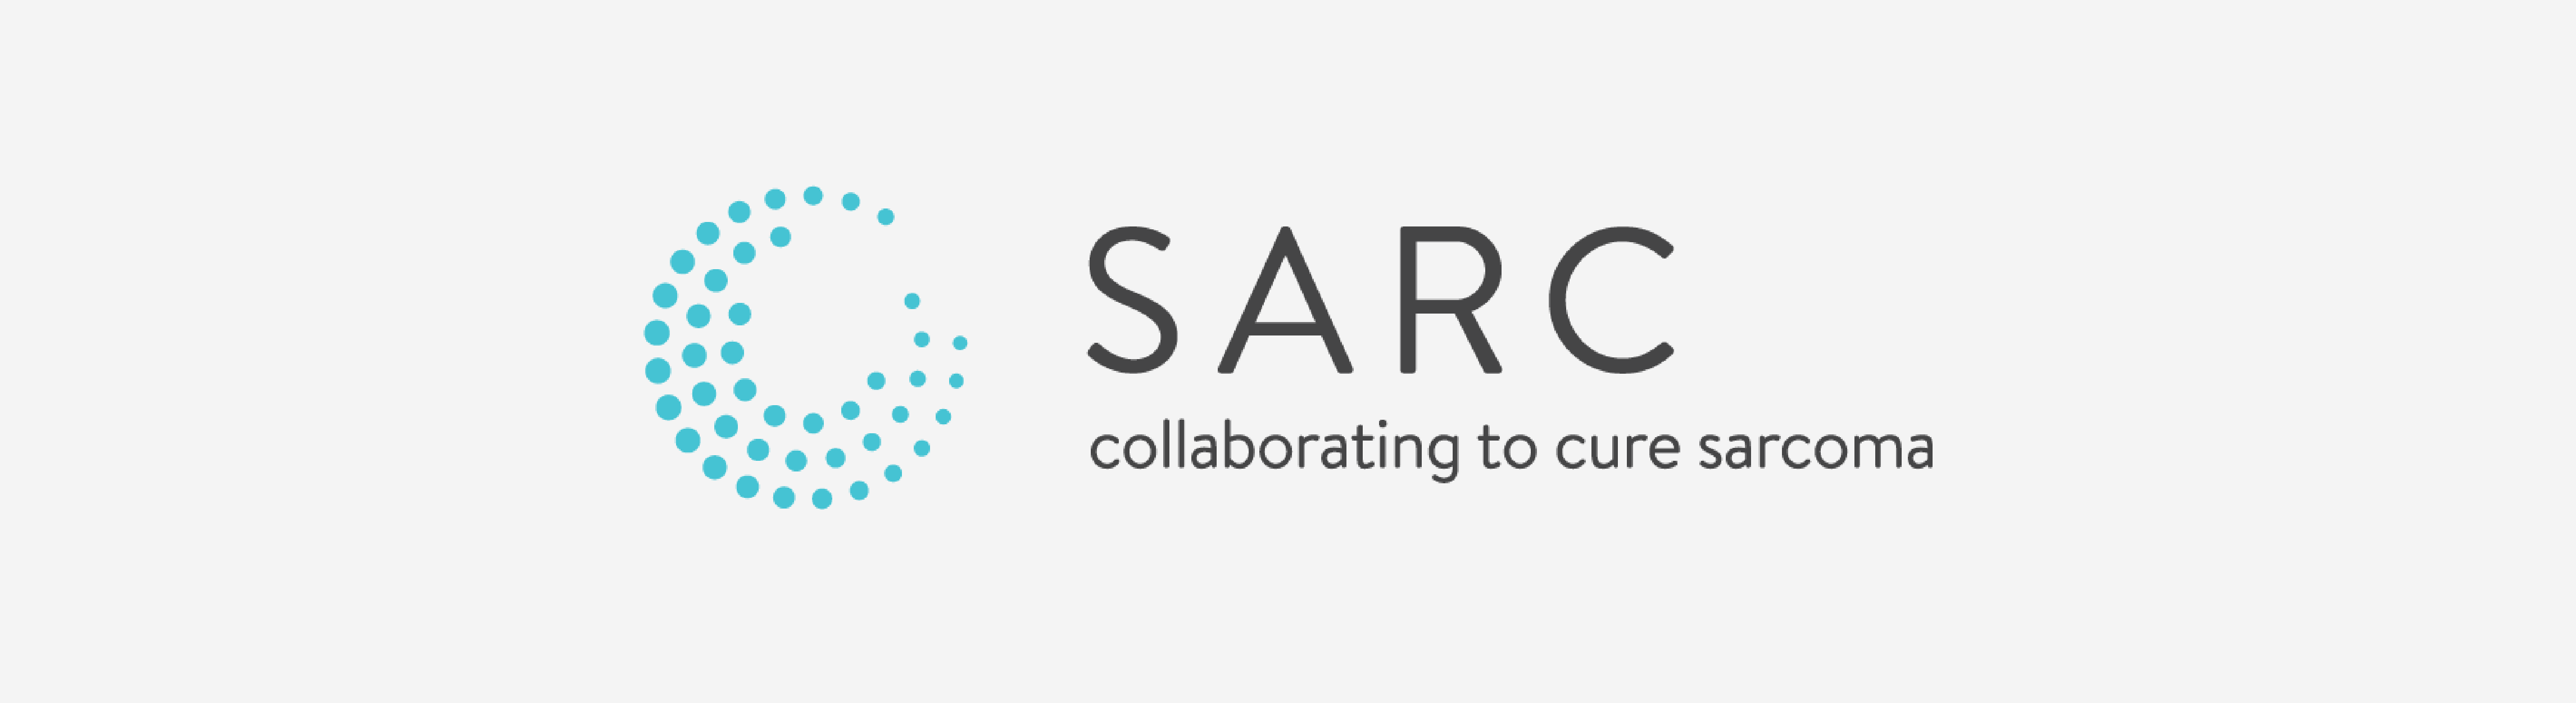 SARC Logo (grey background)